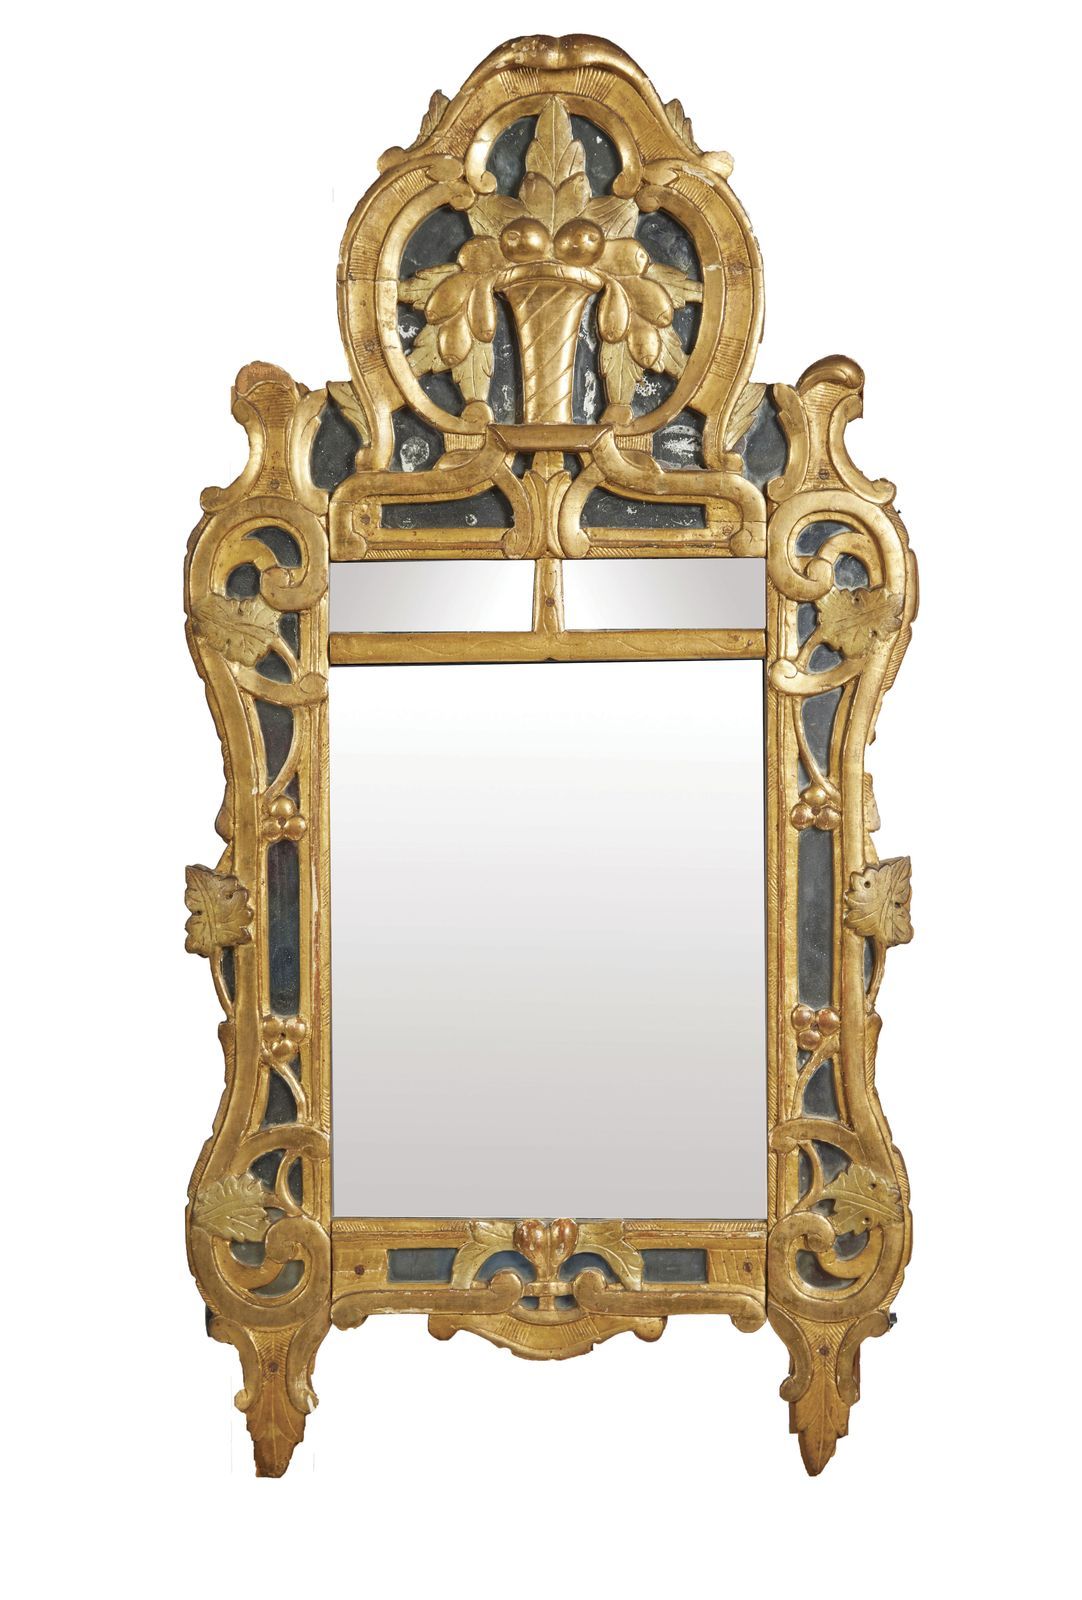 Null 199-粉刷和镀金的木头镜子，上面有橡树叶和橡子

18世纪

事故

110x54厘米